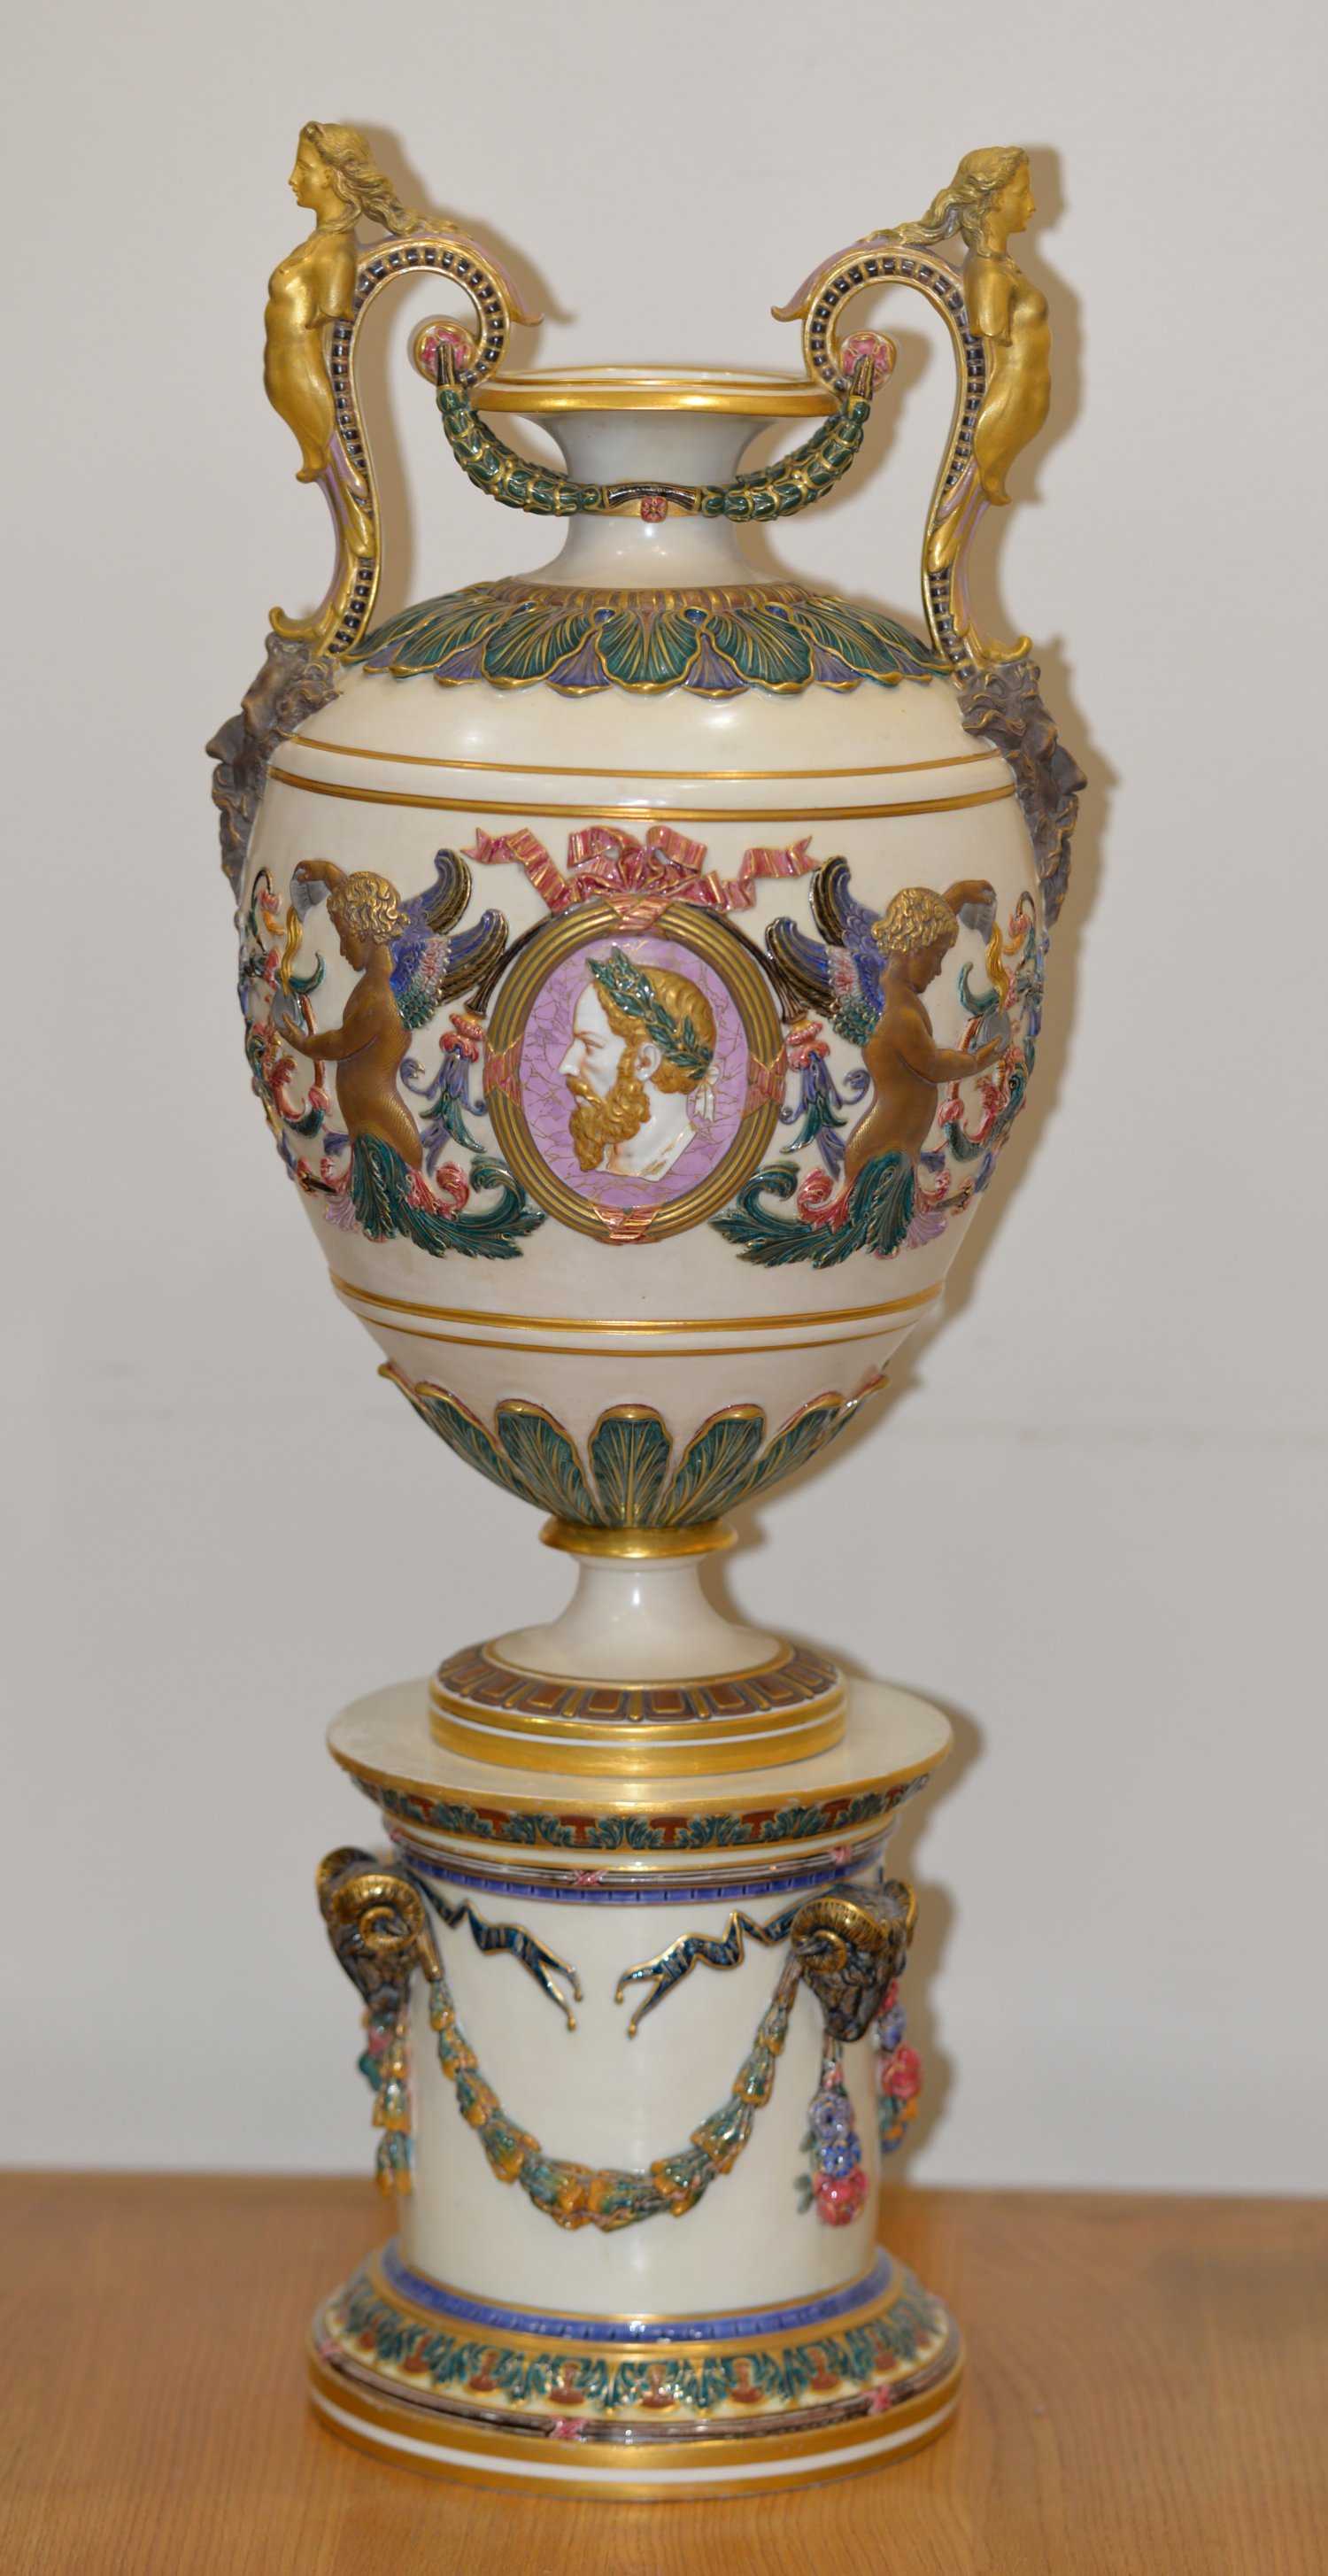 An important Royal Worcester Exhibition Vase and pedestal base